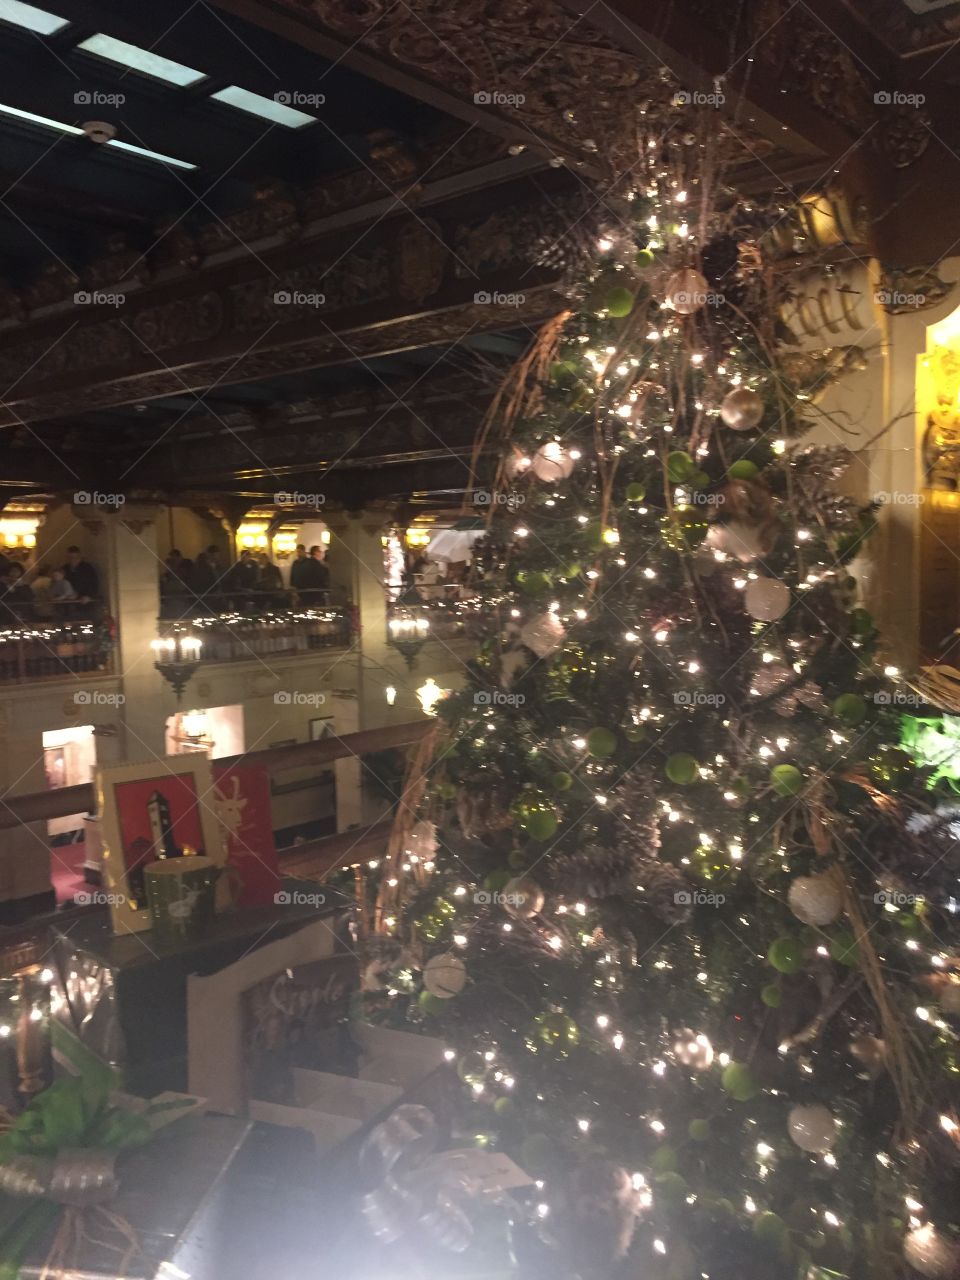 Christmas Tree at the Davenport Hotel